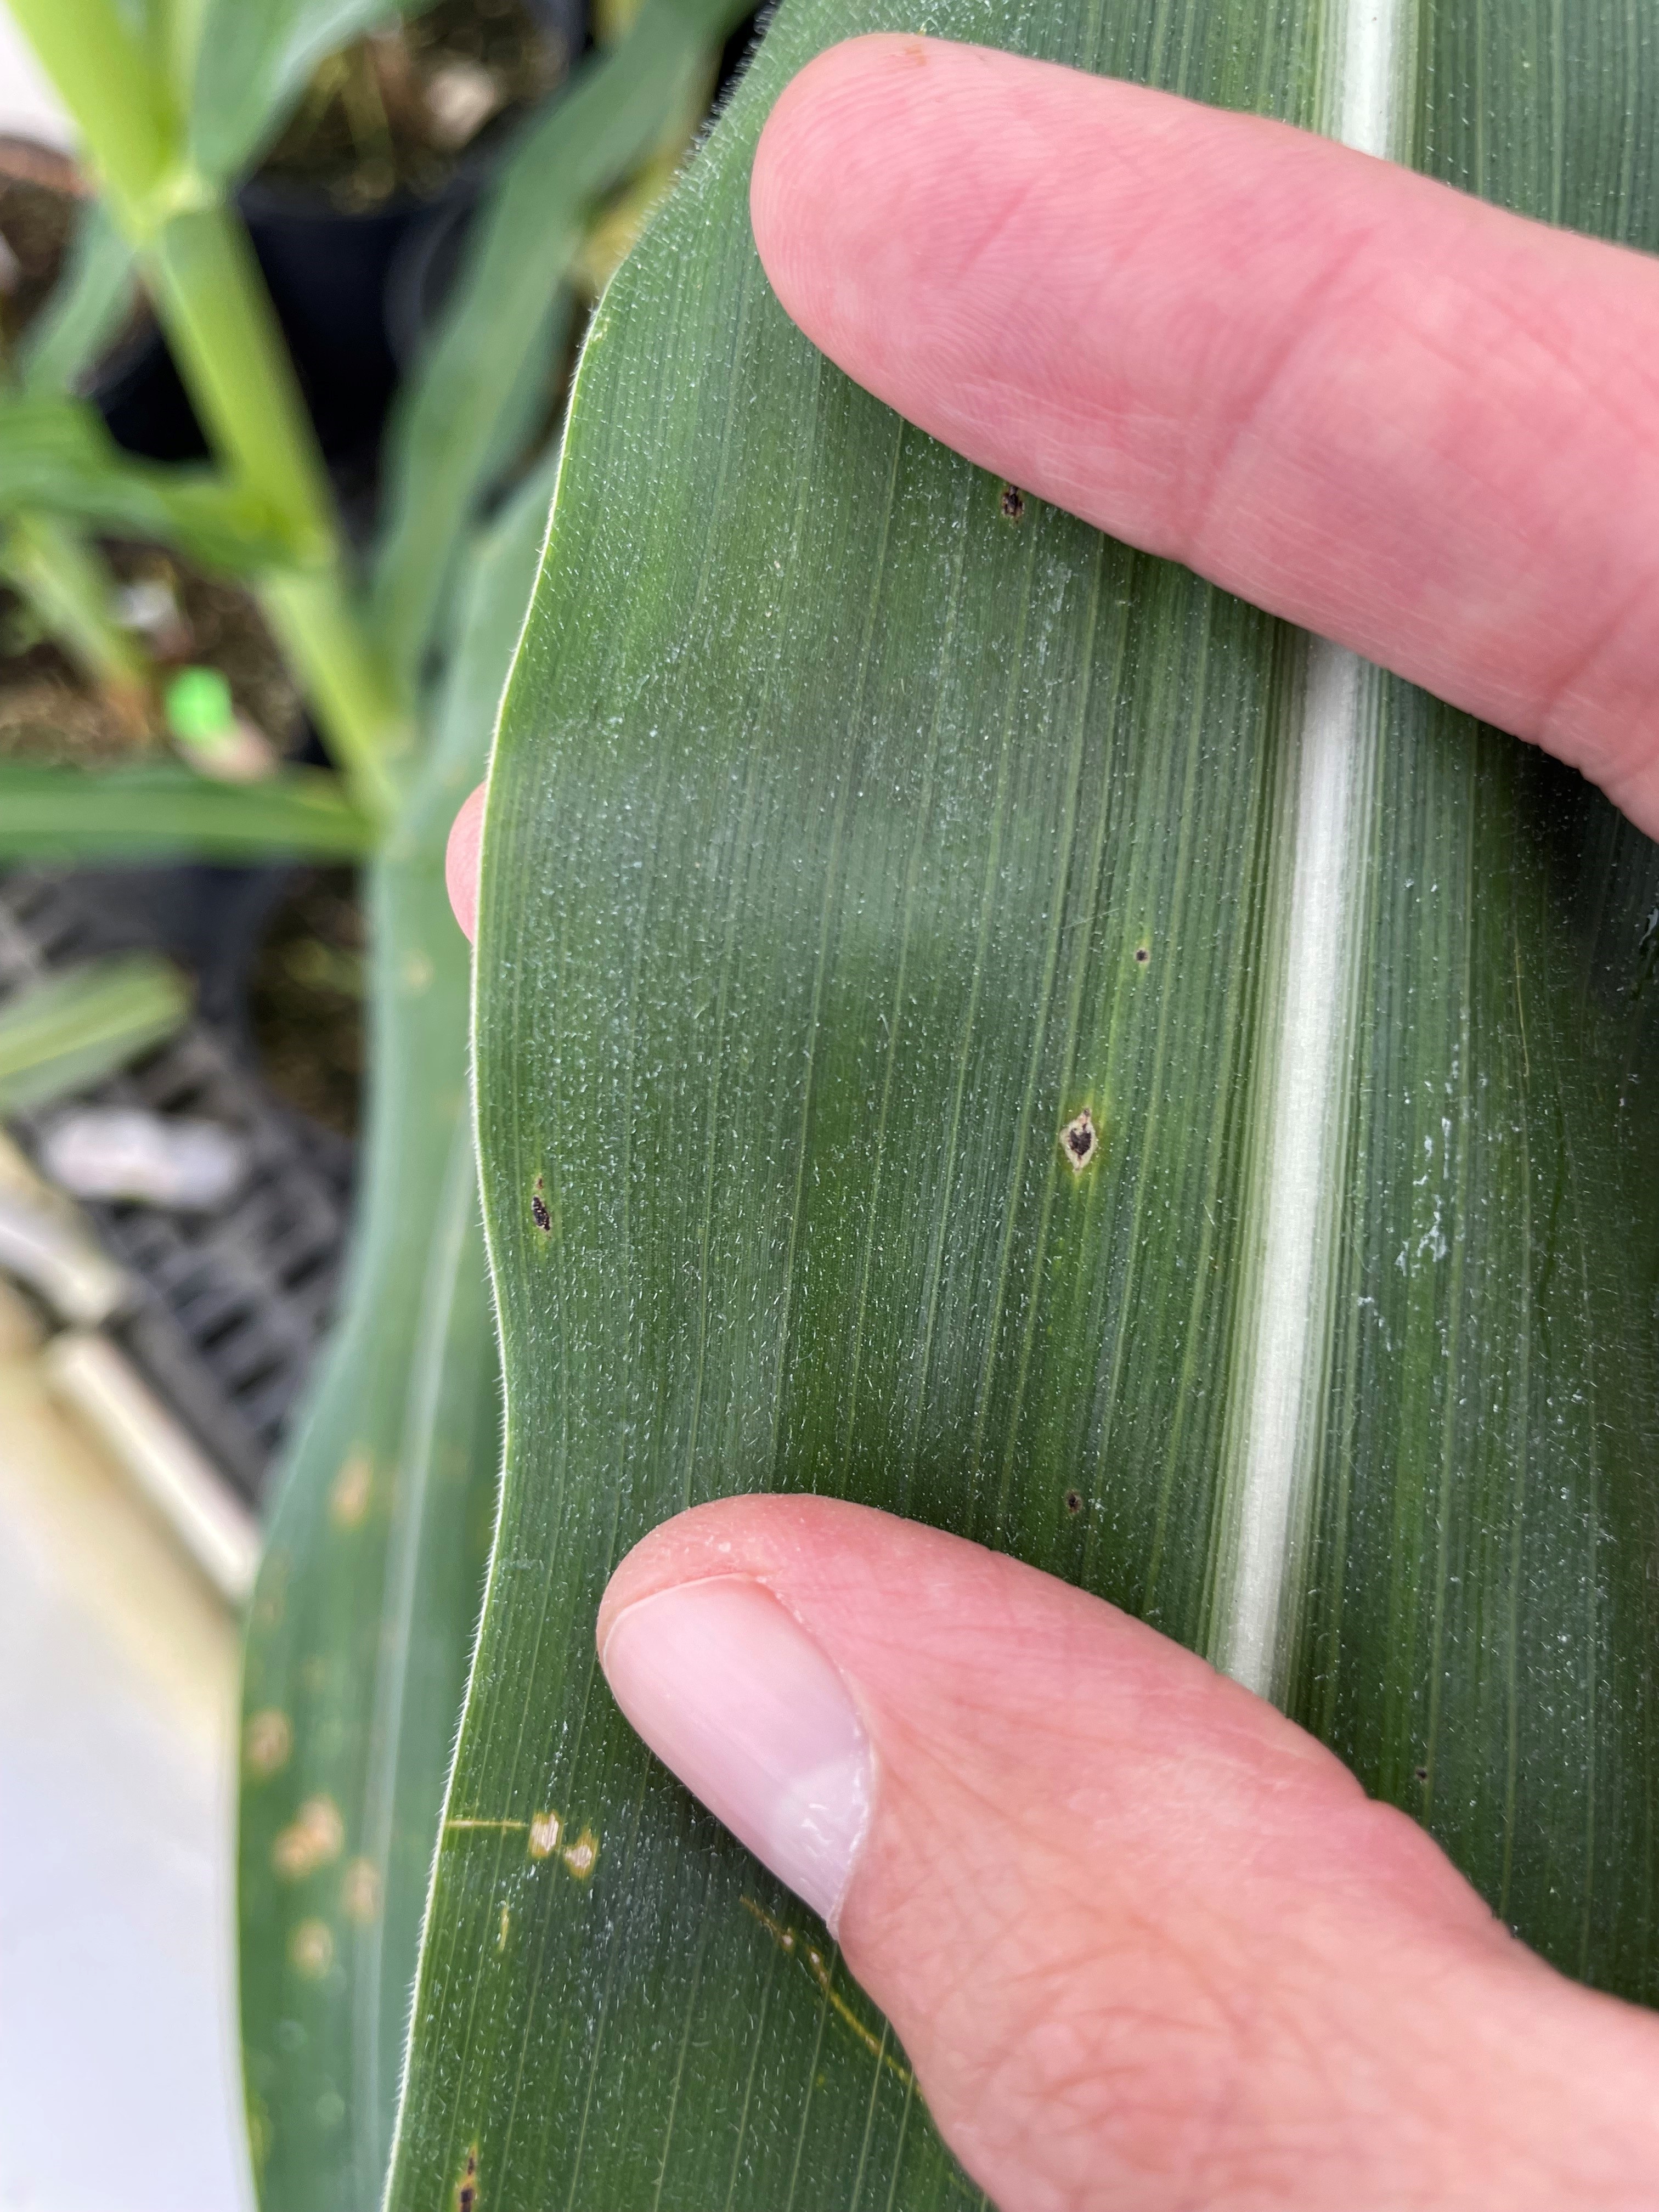 Tar spot lesions on a corn leaf.